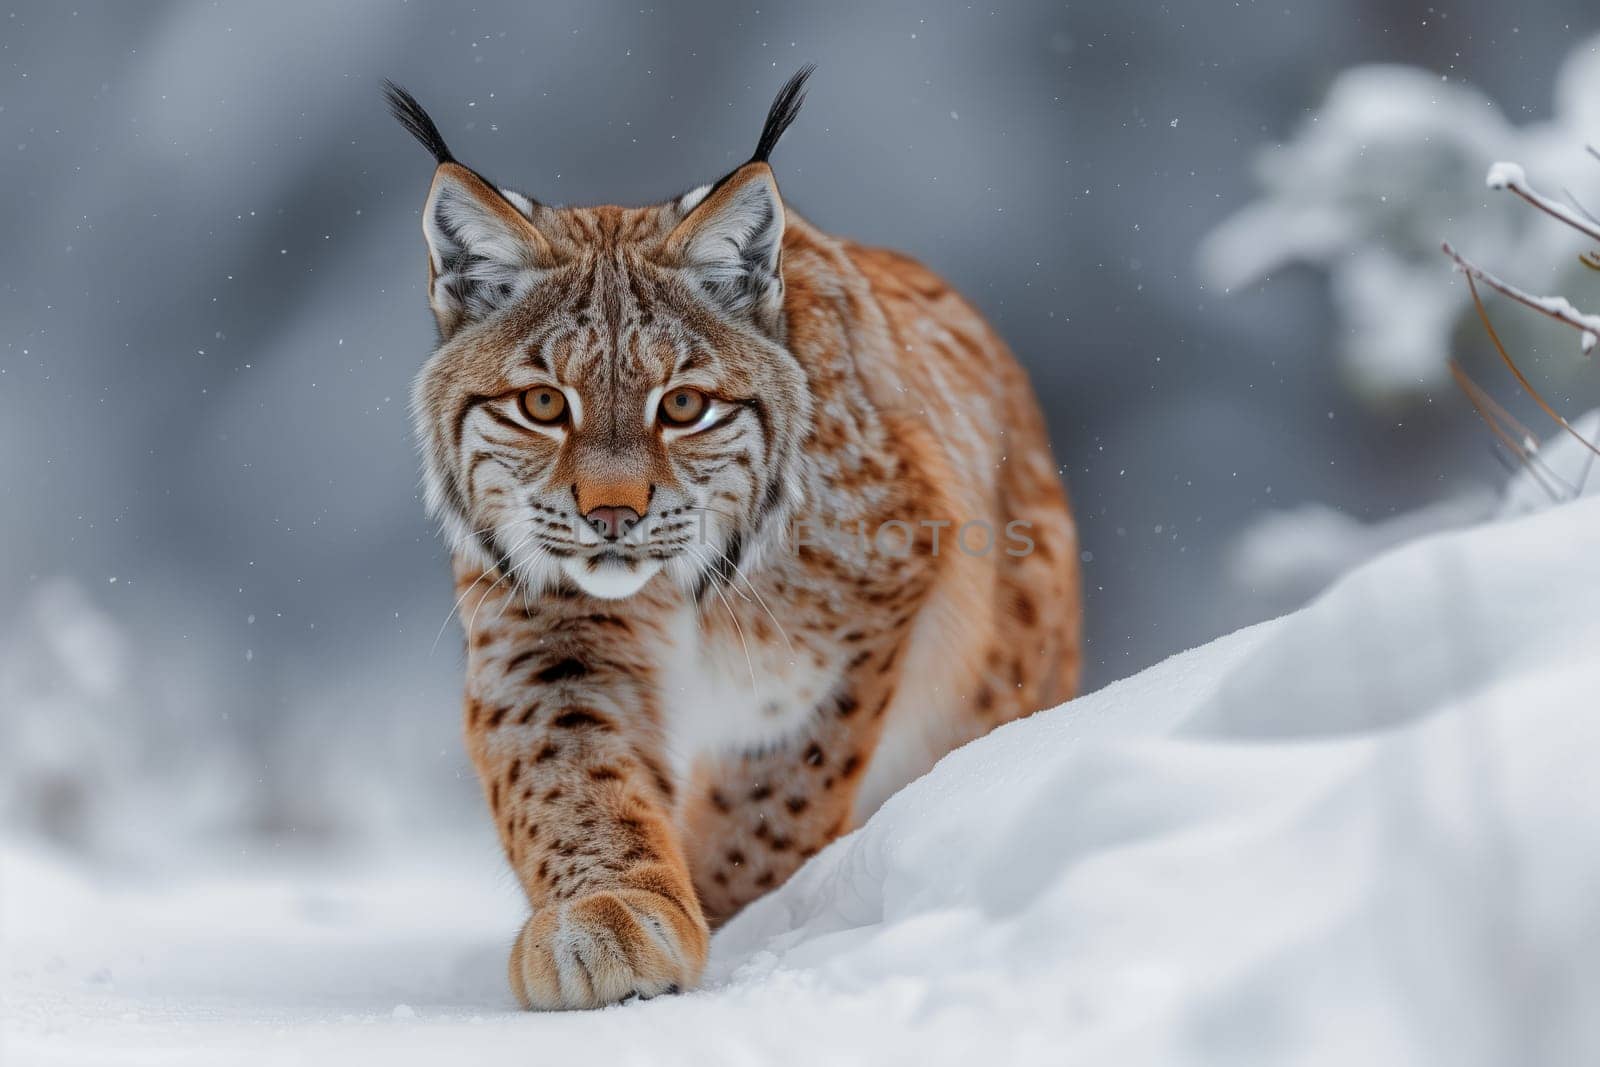 Felidae carnivore Lynx with whiskers walking in snow, terrestrial animal by richwolf